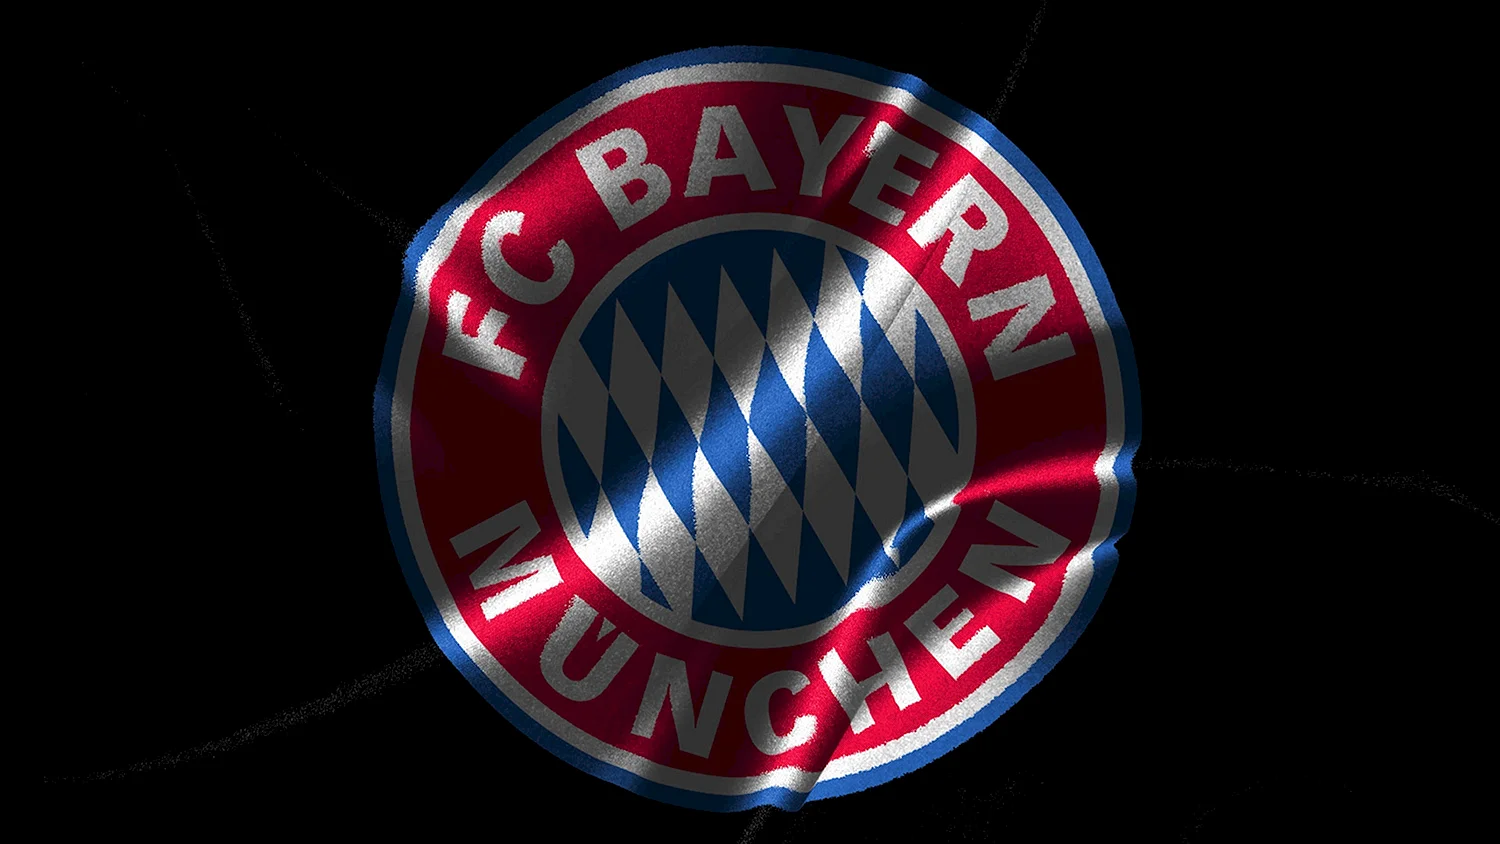 ФК Бавария logo